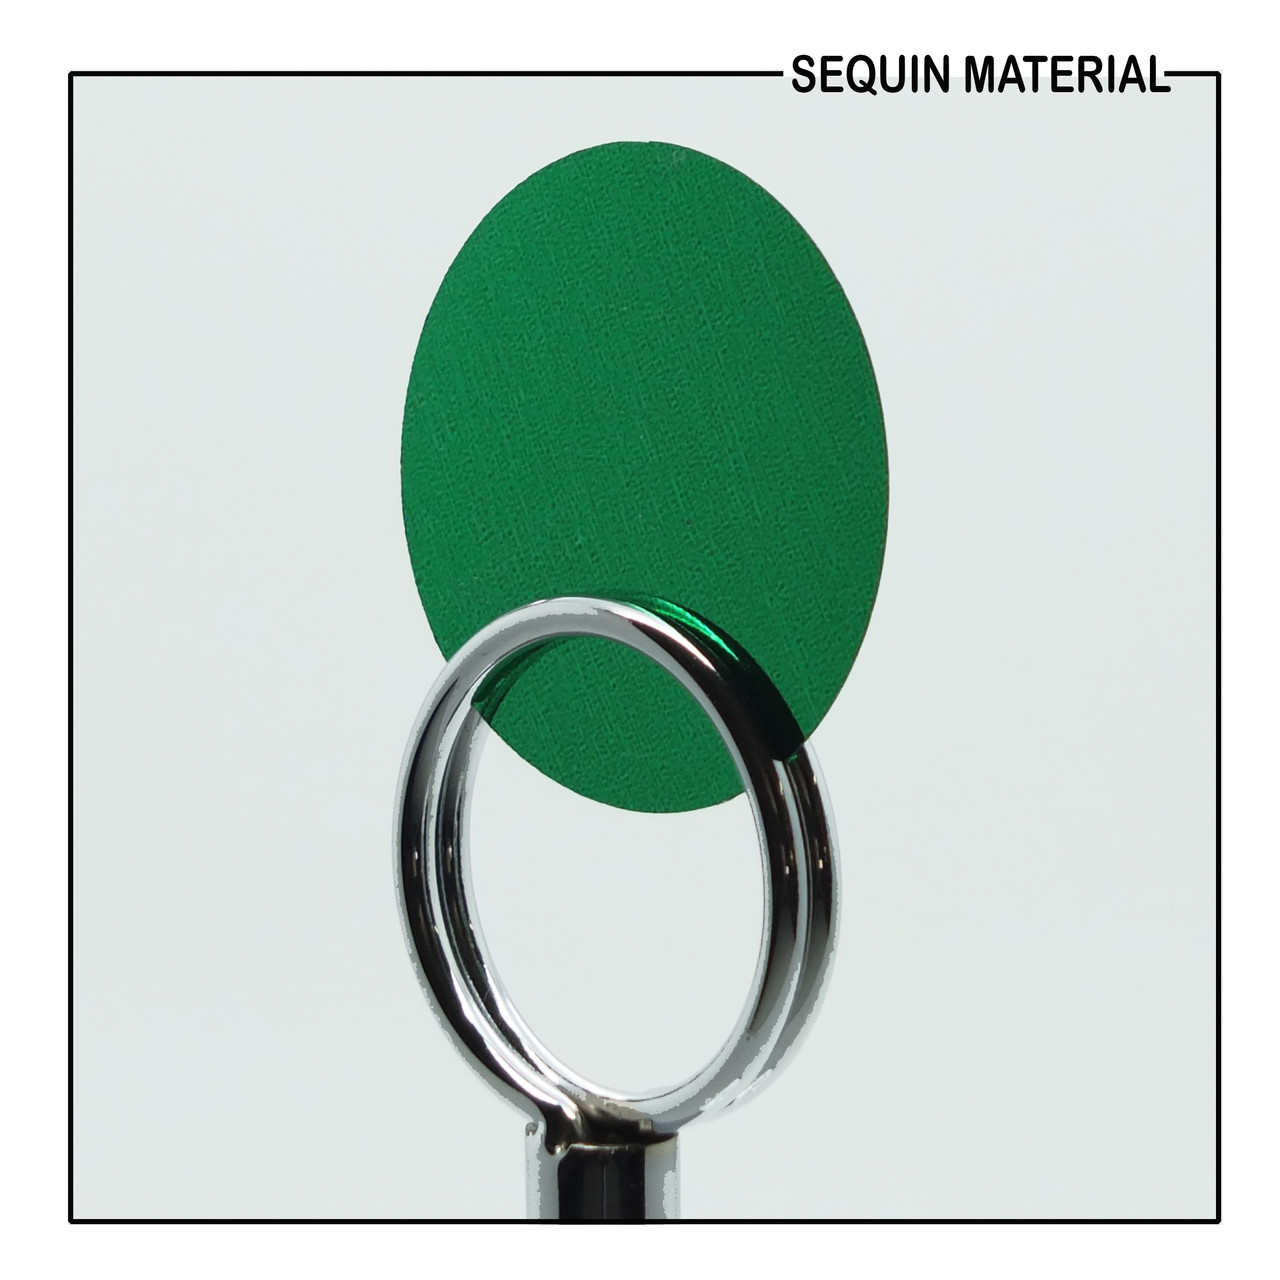 SequinsUSA Green Shiny Metallic Sequin Material Sequin Material RK007